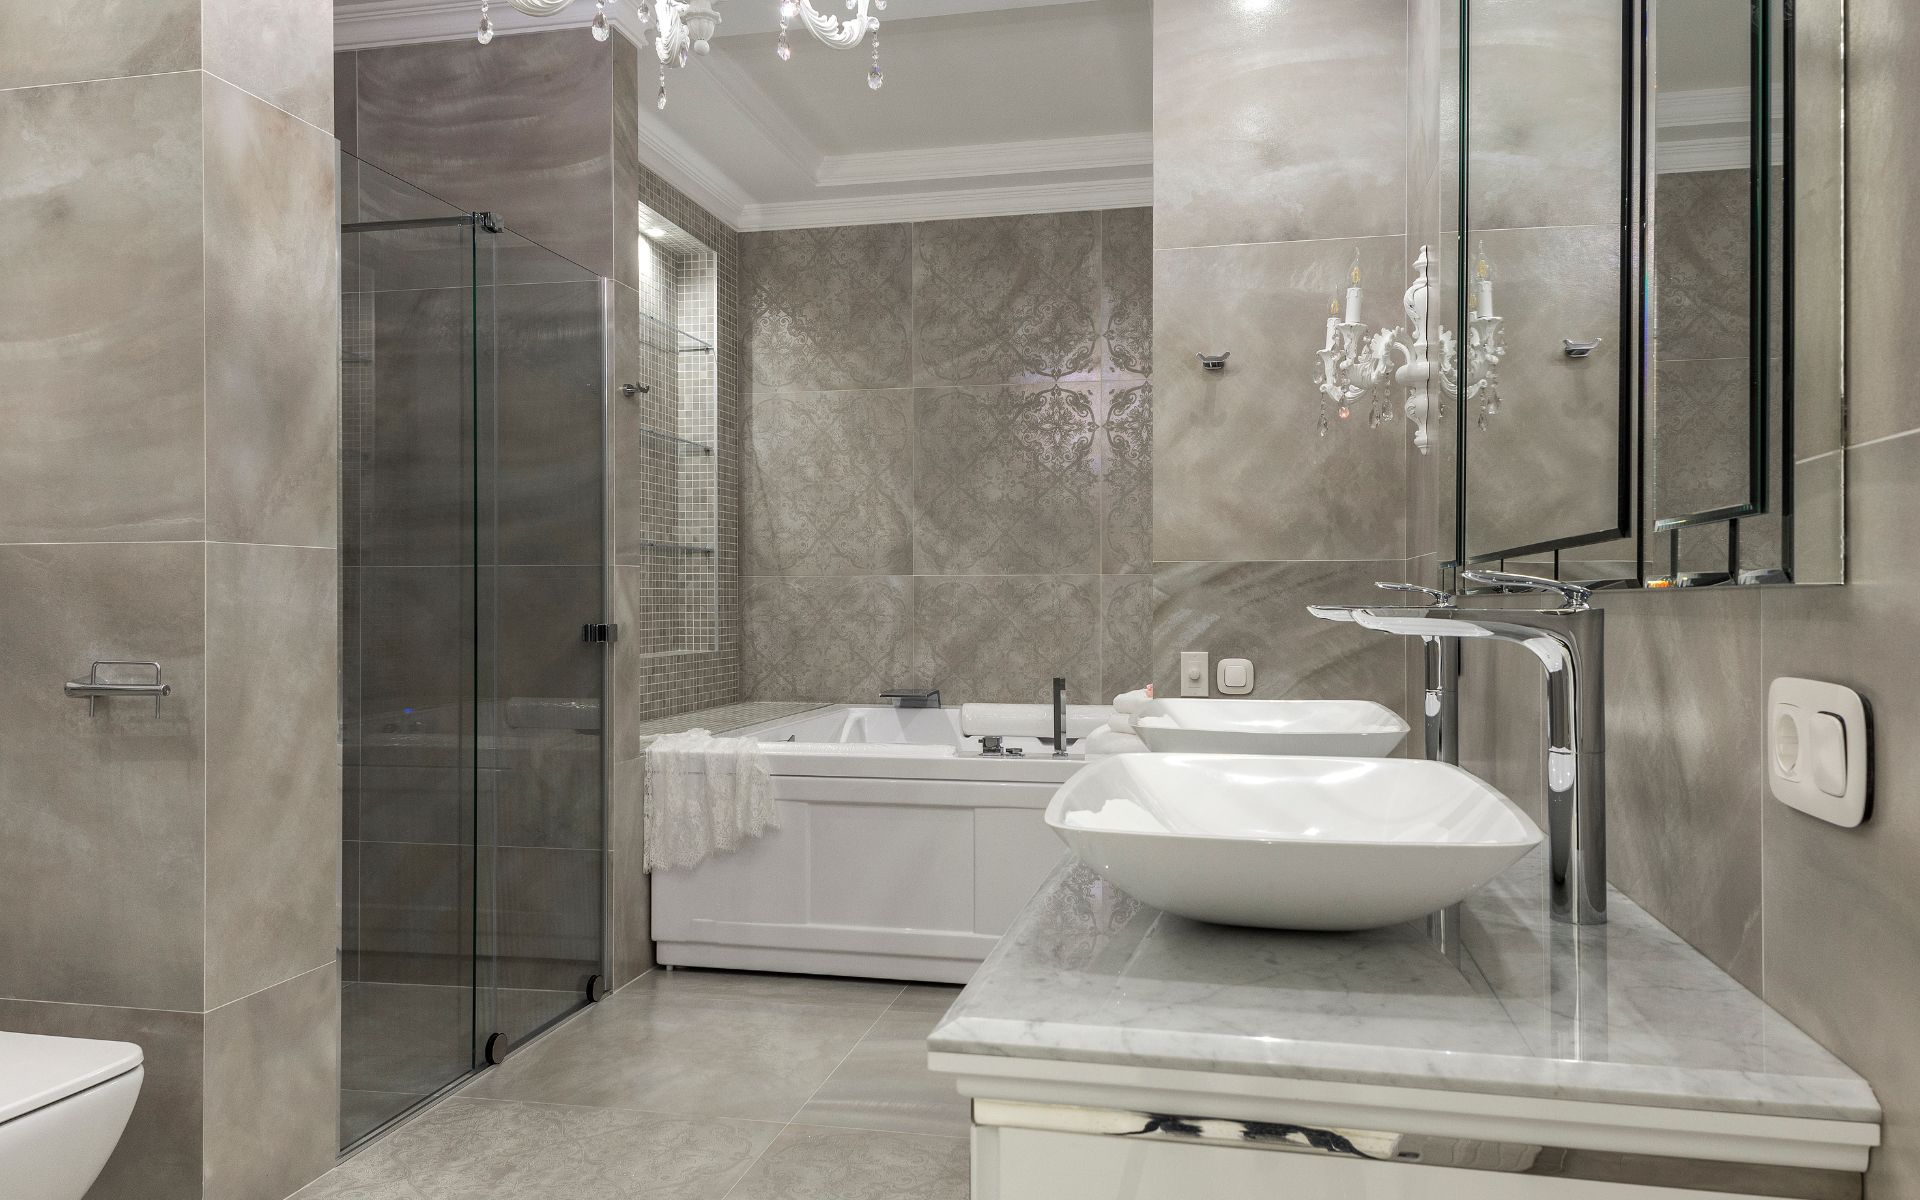 Elegant bathroom with vessel sinks, tub and shower